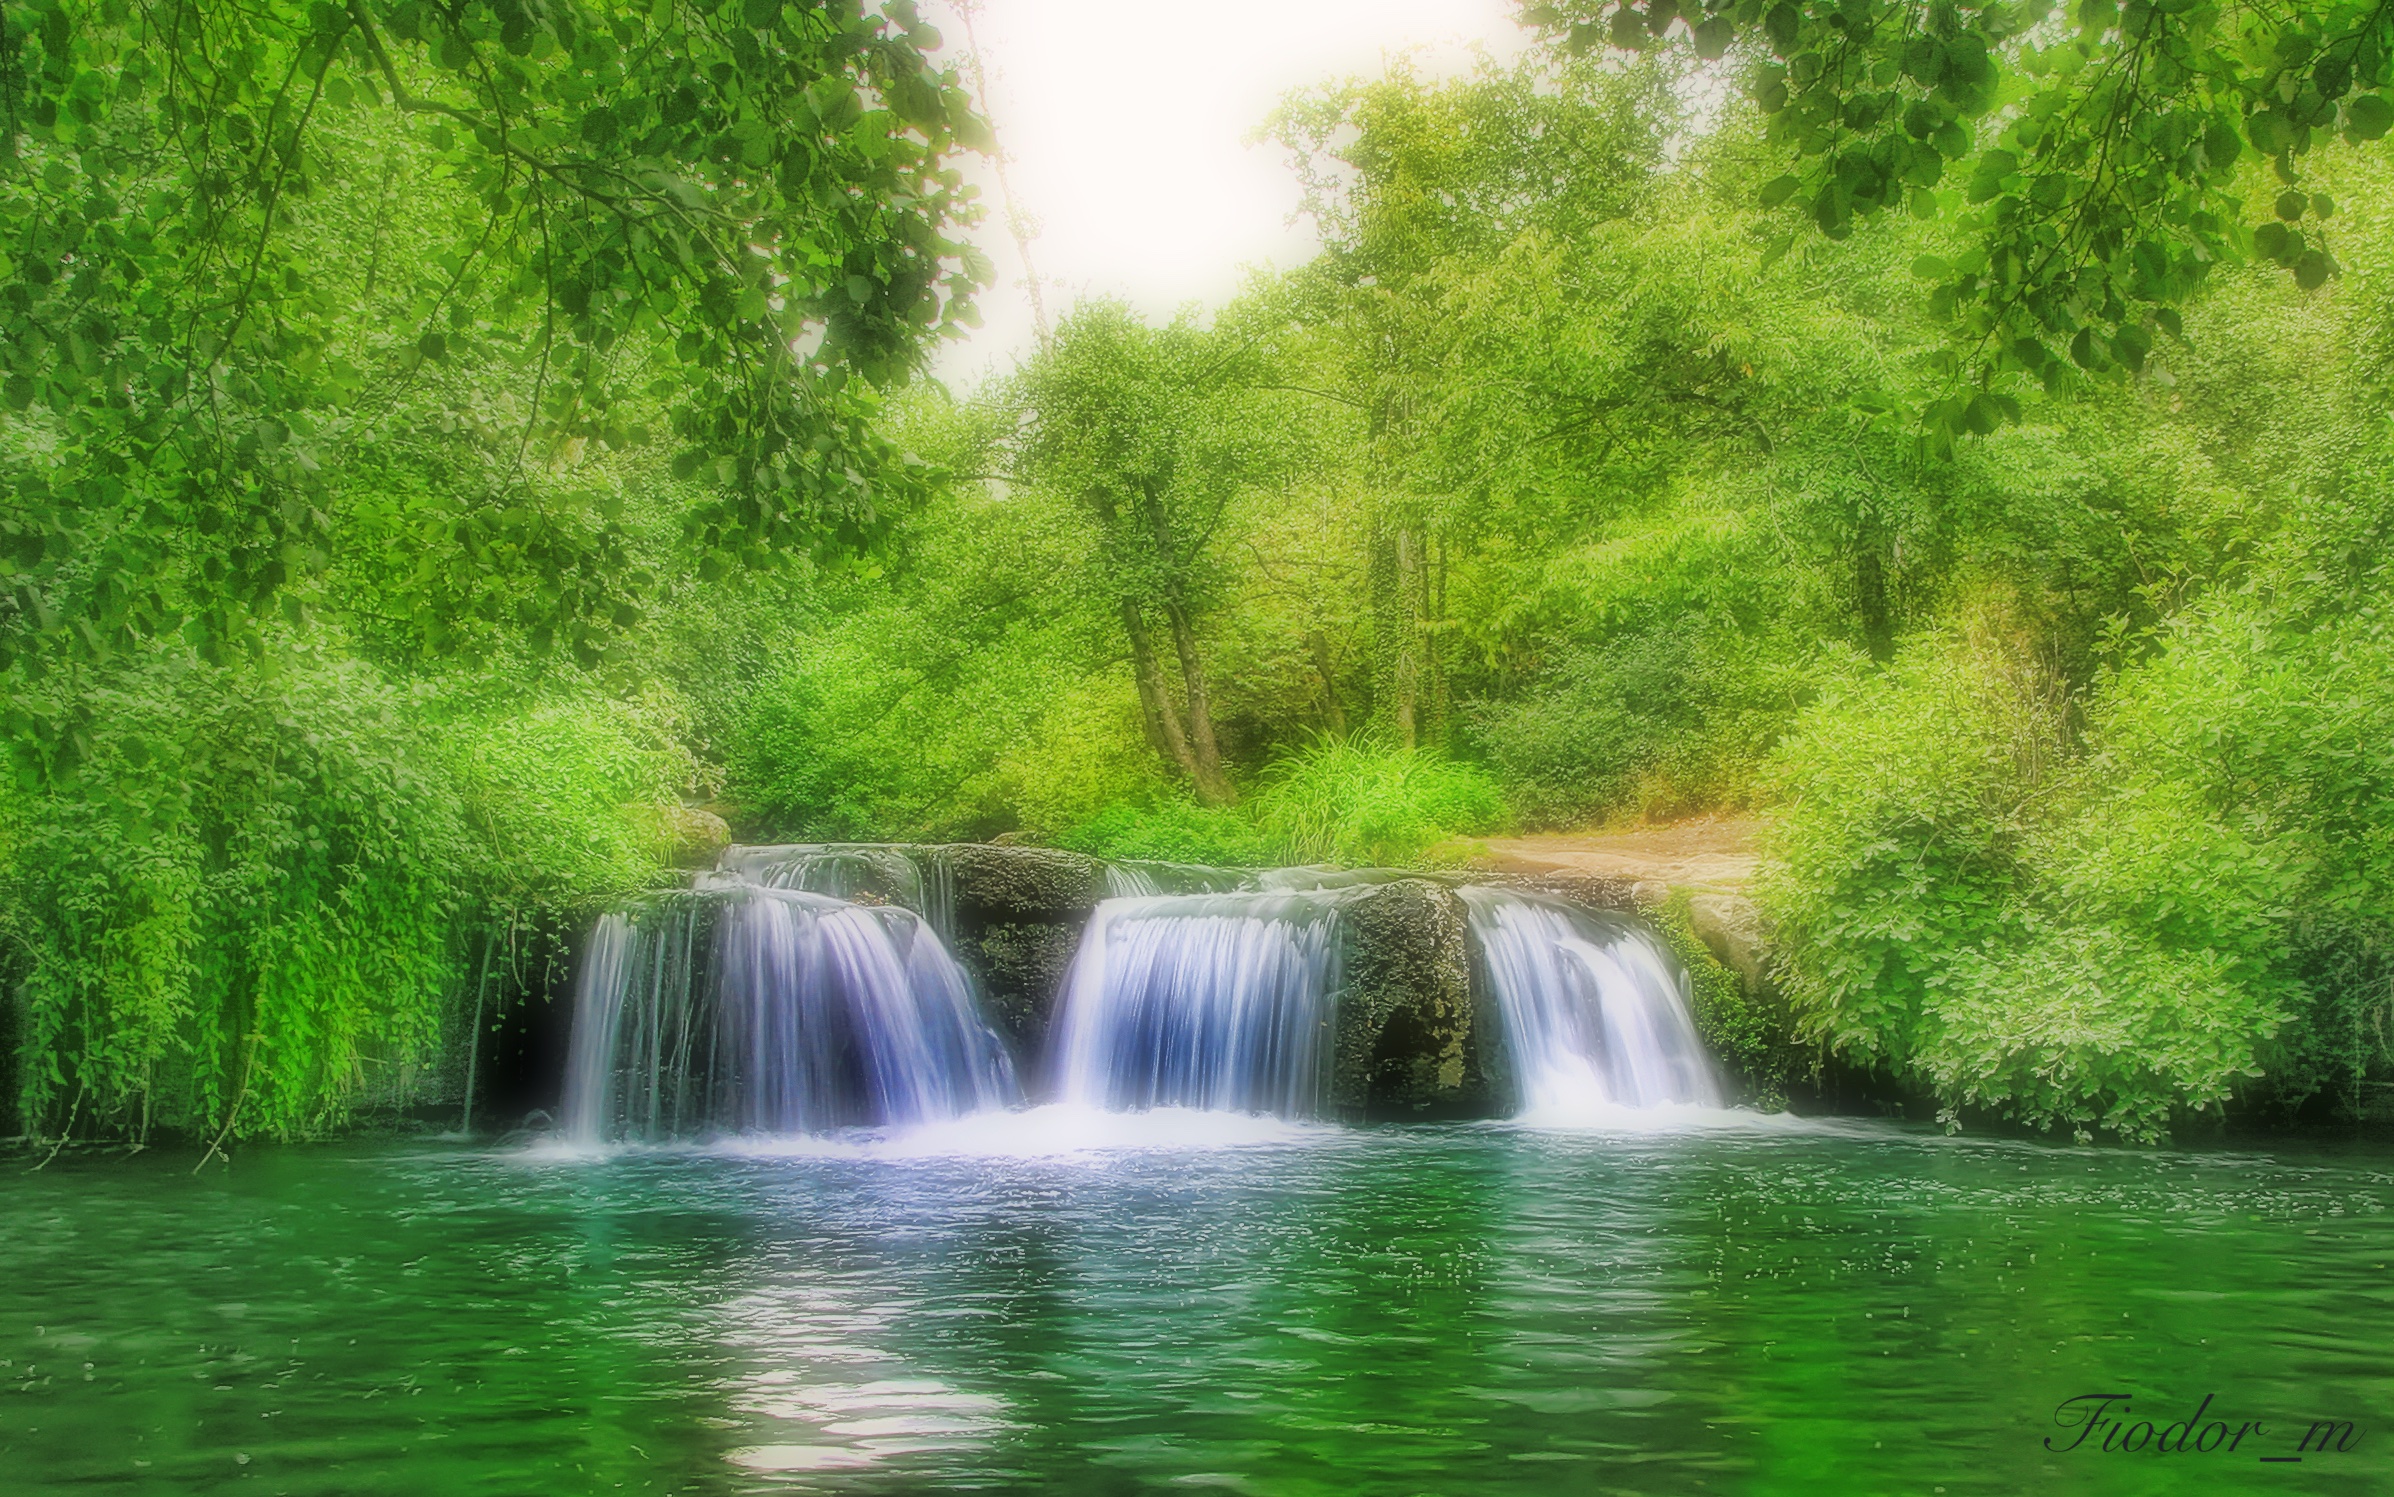 Waterfalls in the green...